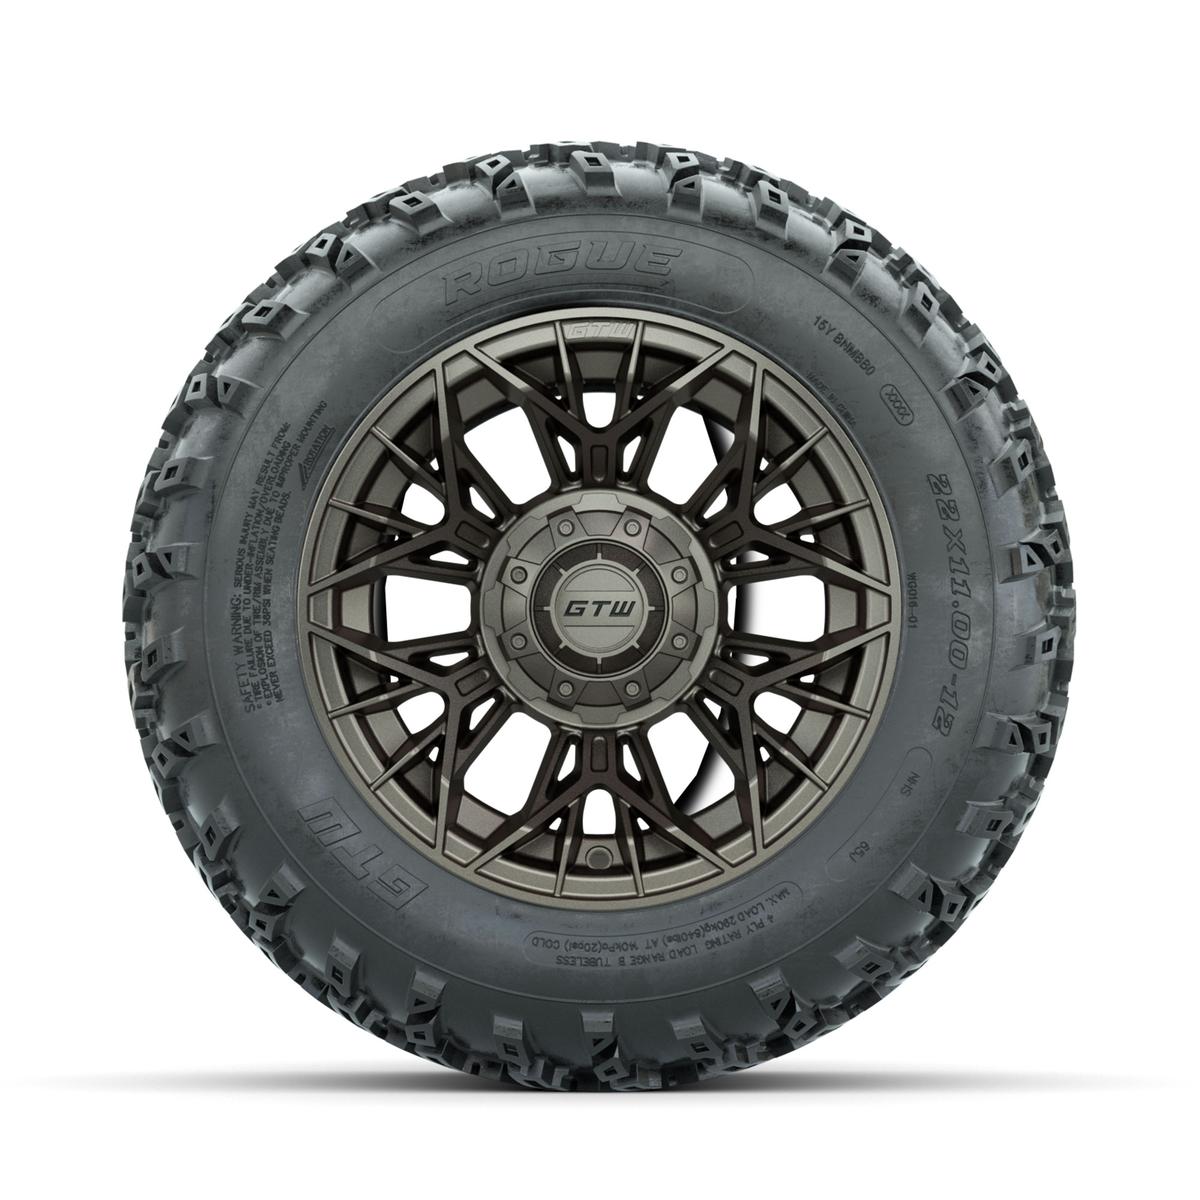 GTW Stellar Matte Bronze 12 in Wheels with 22x11.00-12 Rogue All Terrain Tires – Full Set